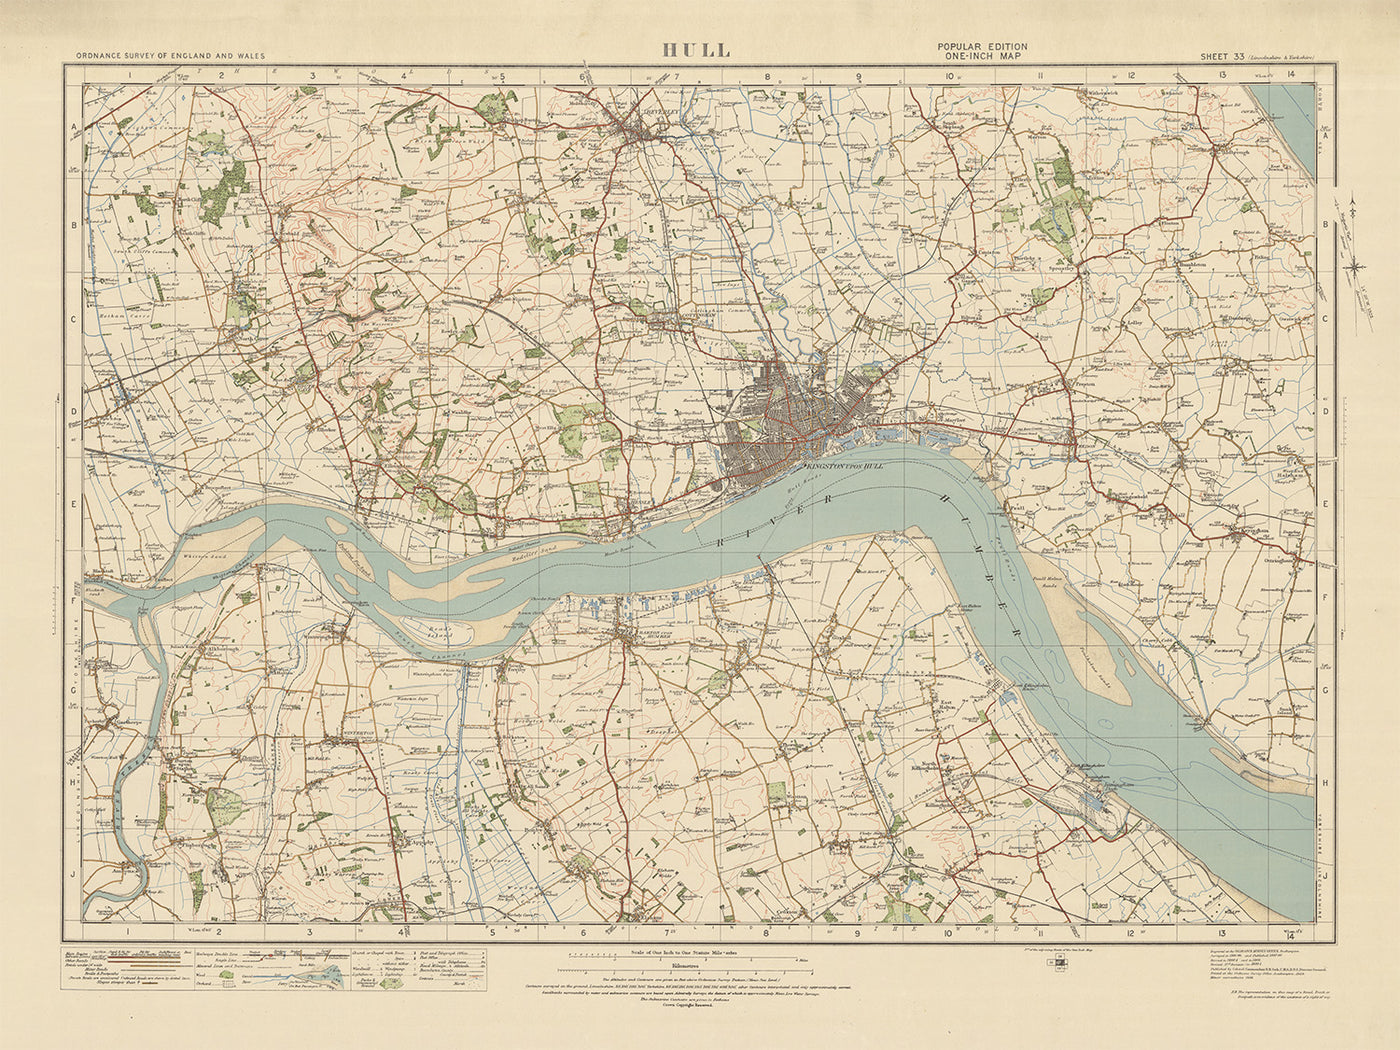 Alte Ordnance Survey Karte, Blatt 33 - Hull, 1925: Beverley, Barton-upon-Humber, Hessle, Winterton und der Fluss Humber